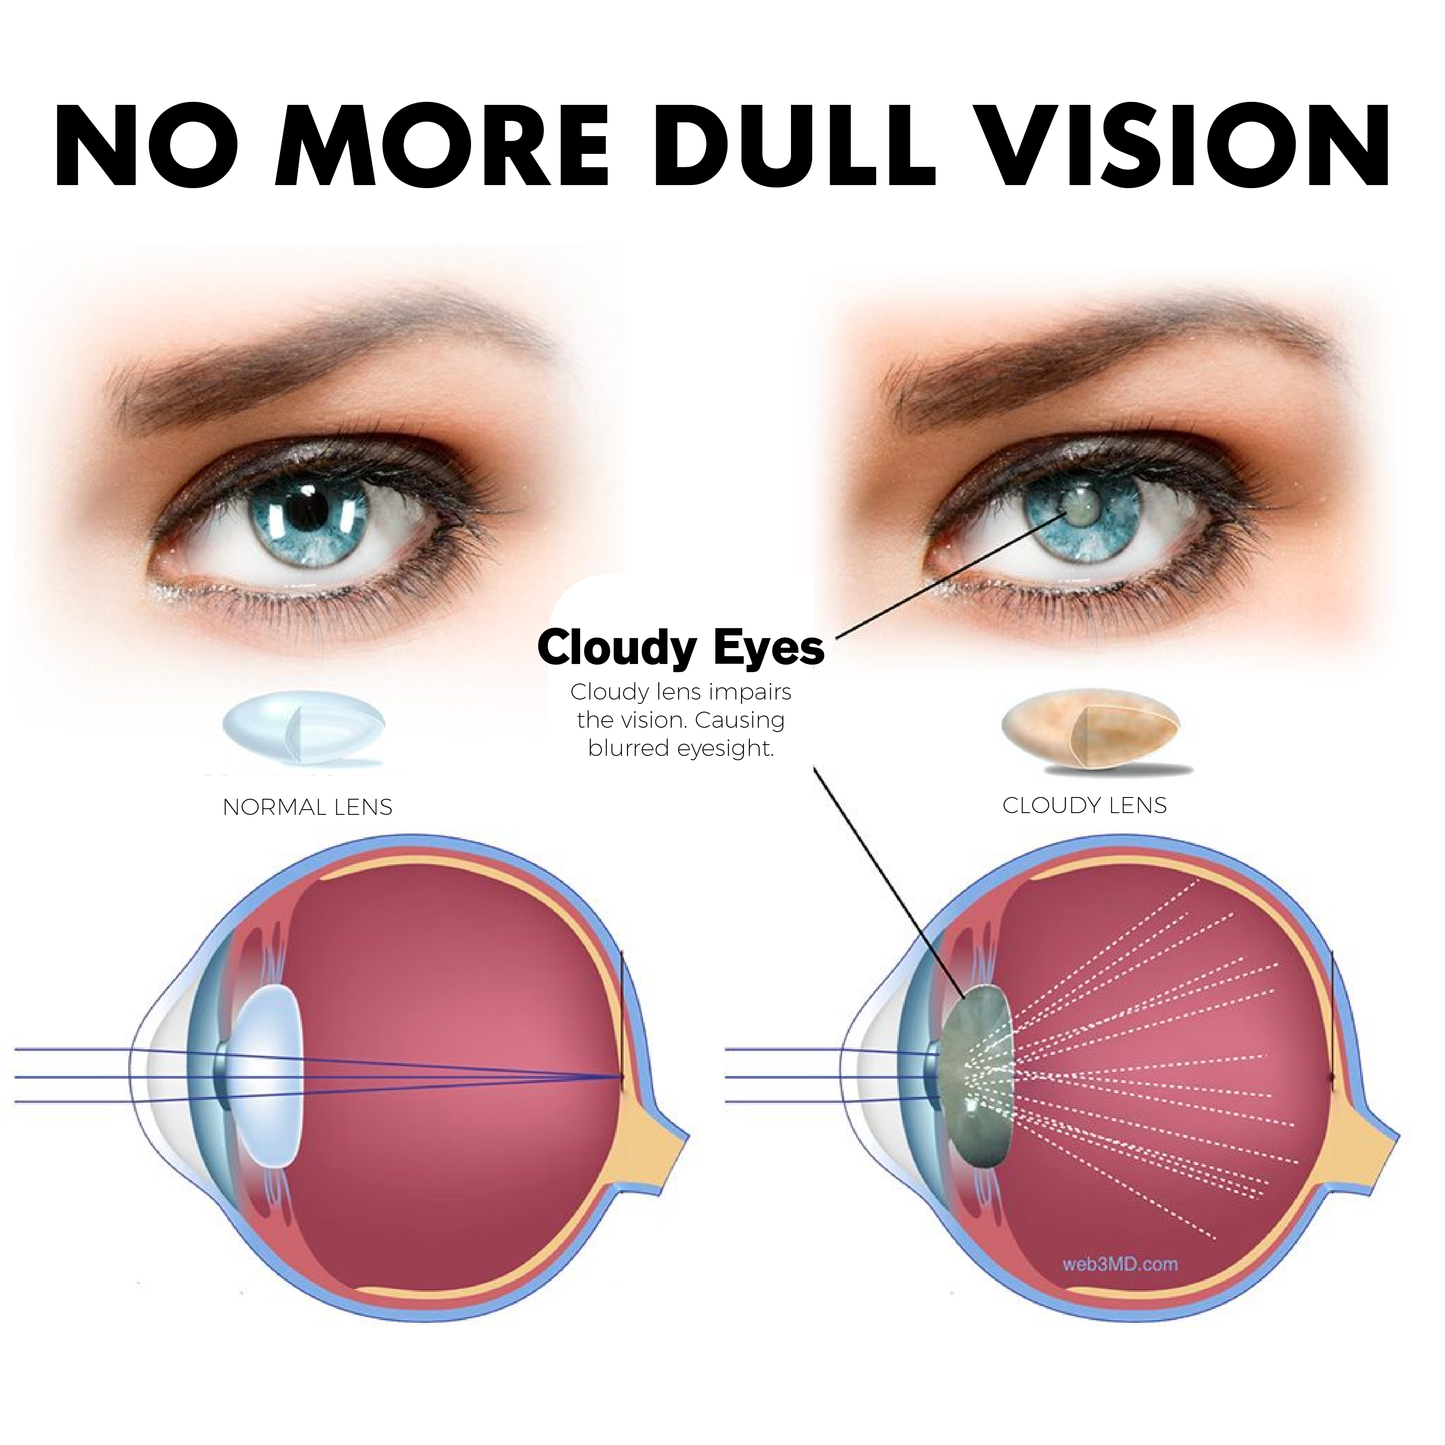 ATTDX Treatment EyeProblems SolutionDrops